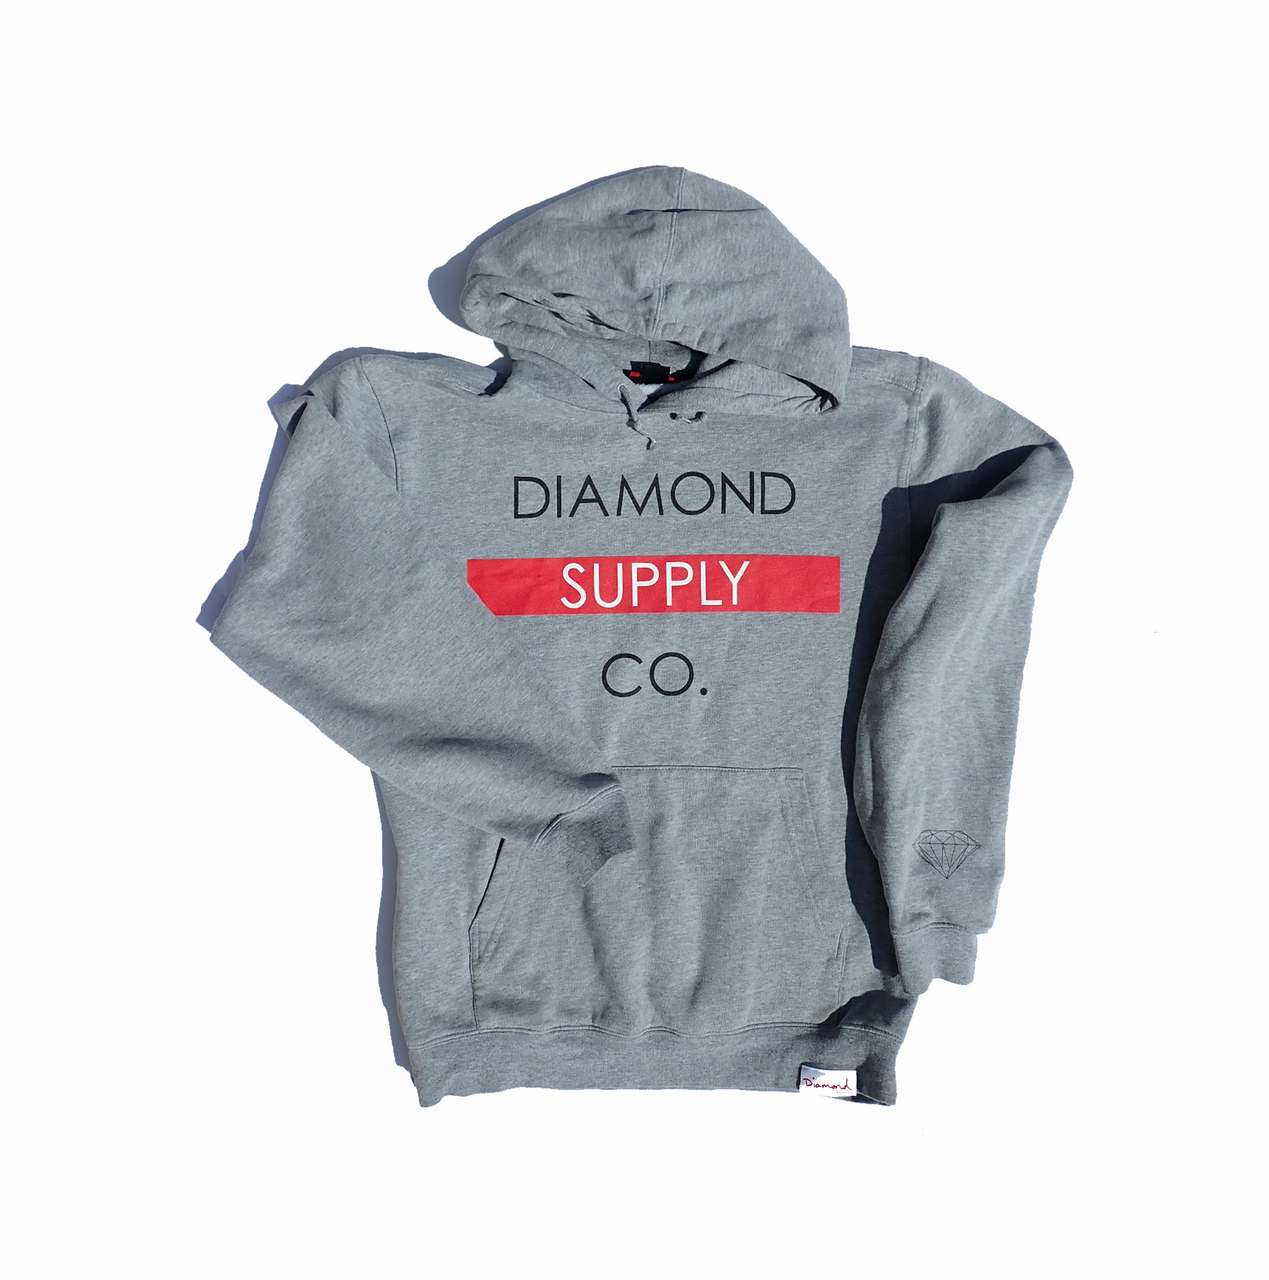 Diamond Supply Co. Grey Hoodie